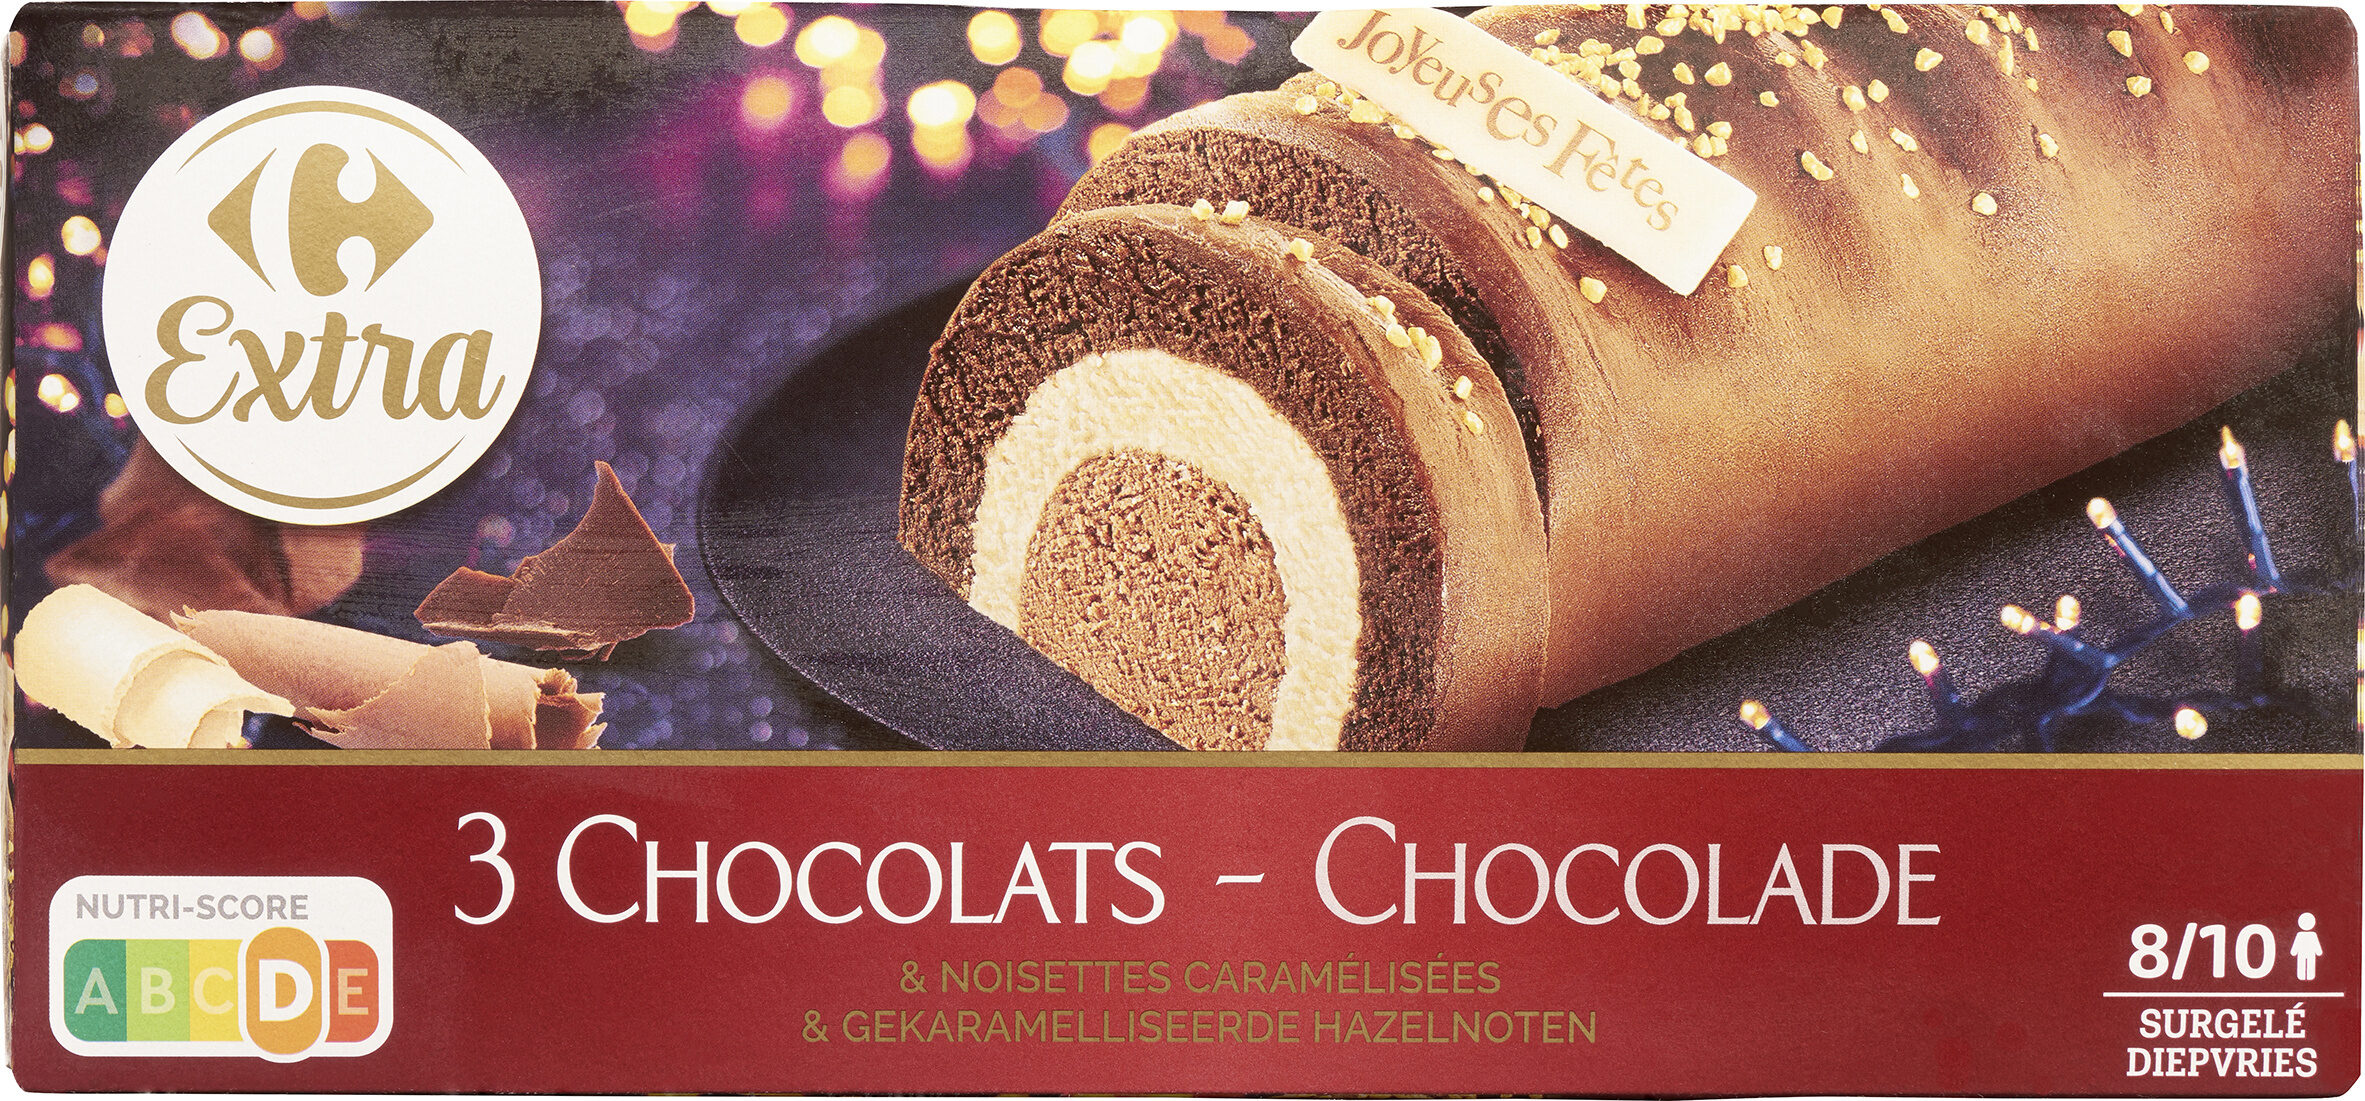 3 Chocolates & noisettes caramélisées - Product - fr